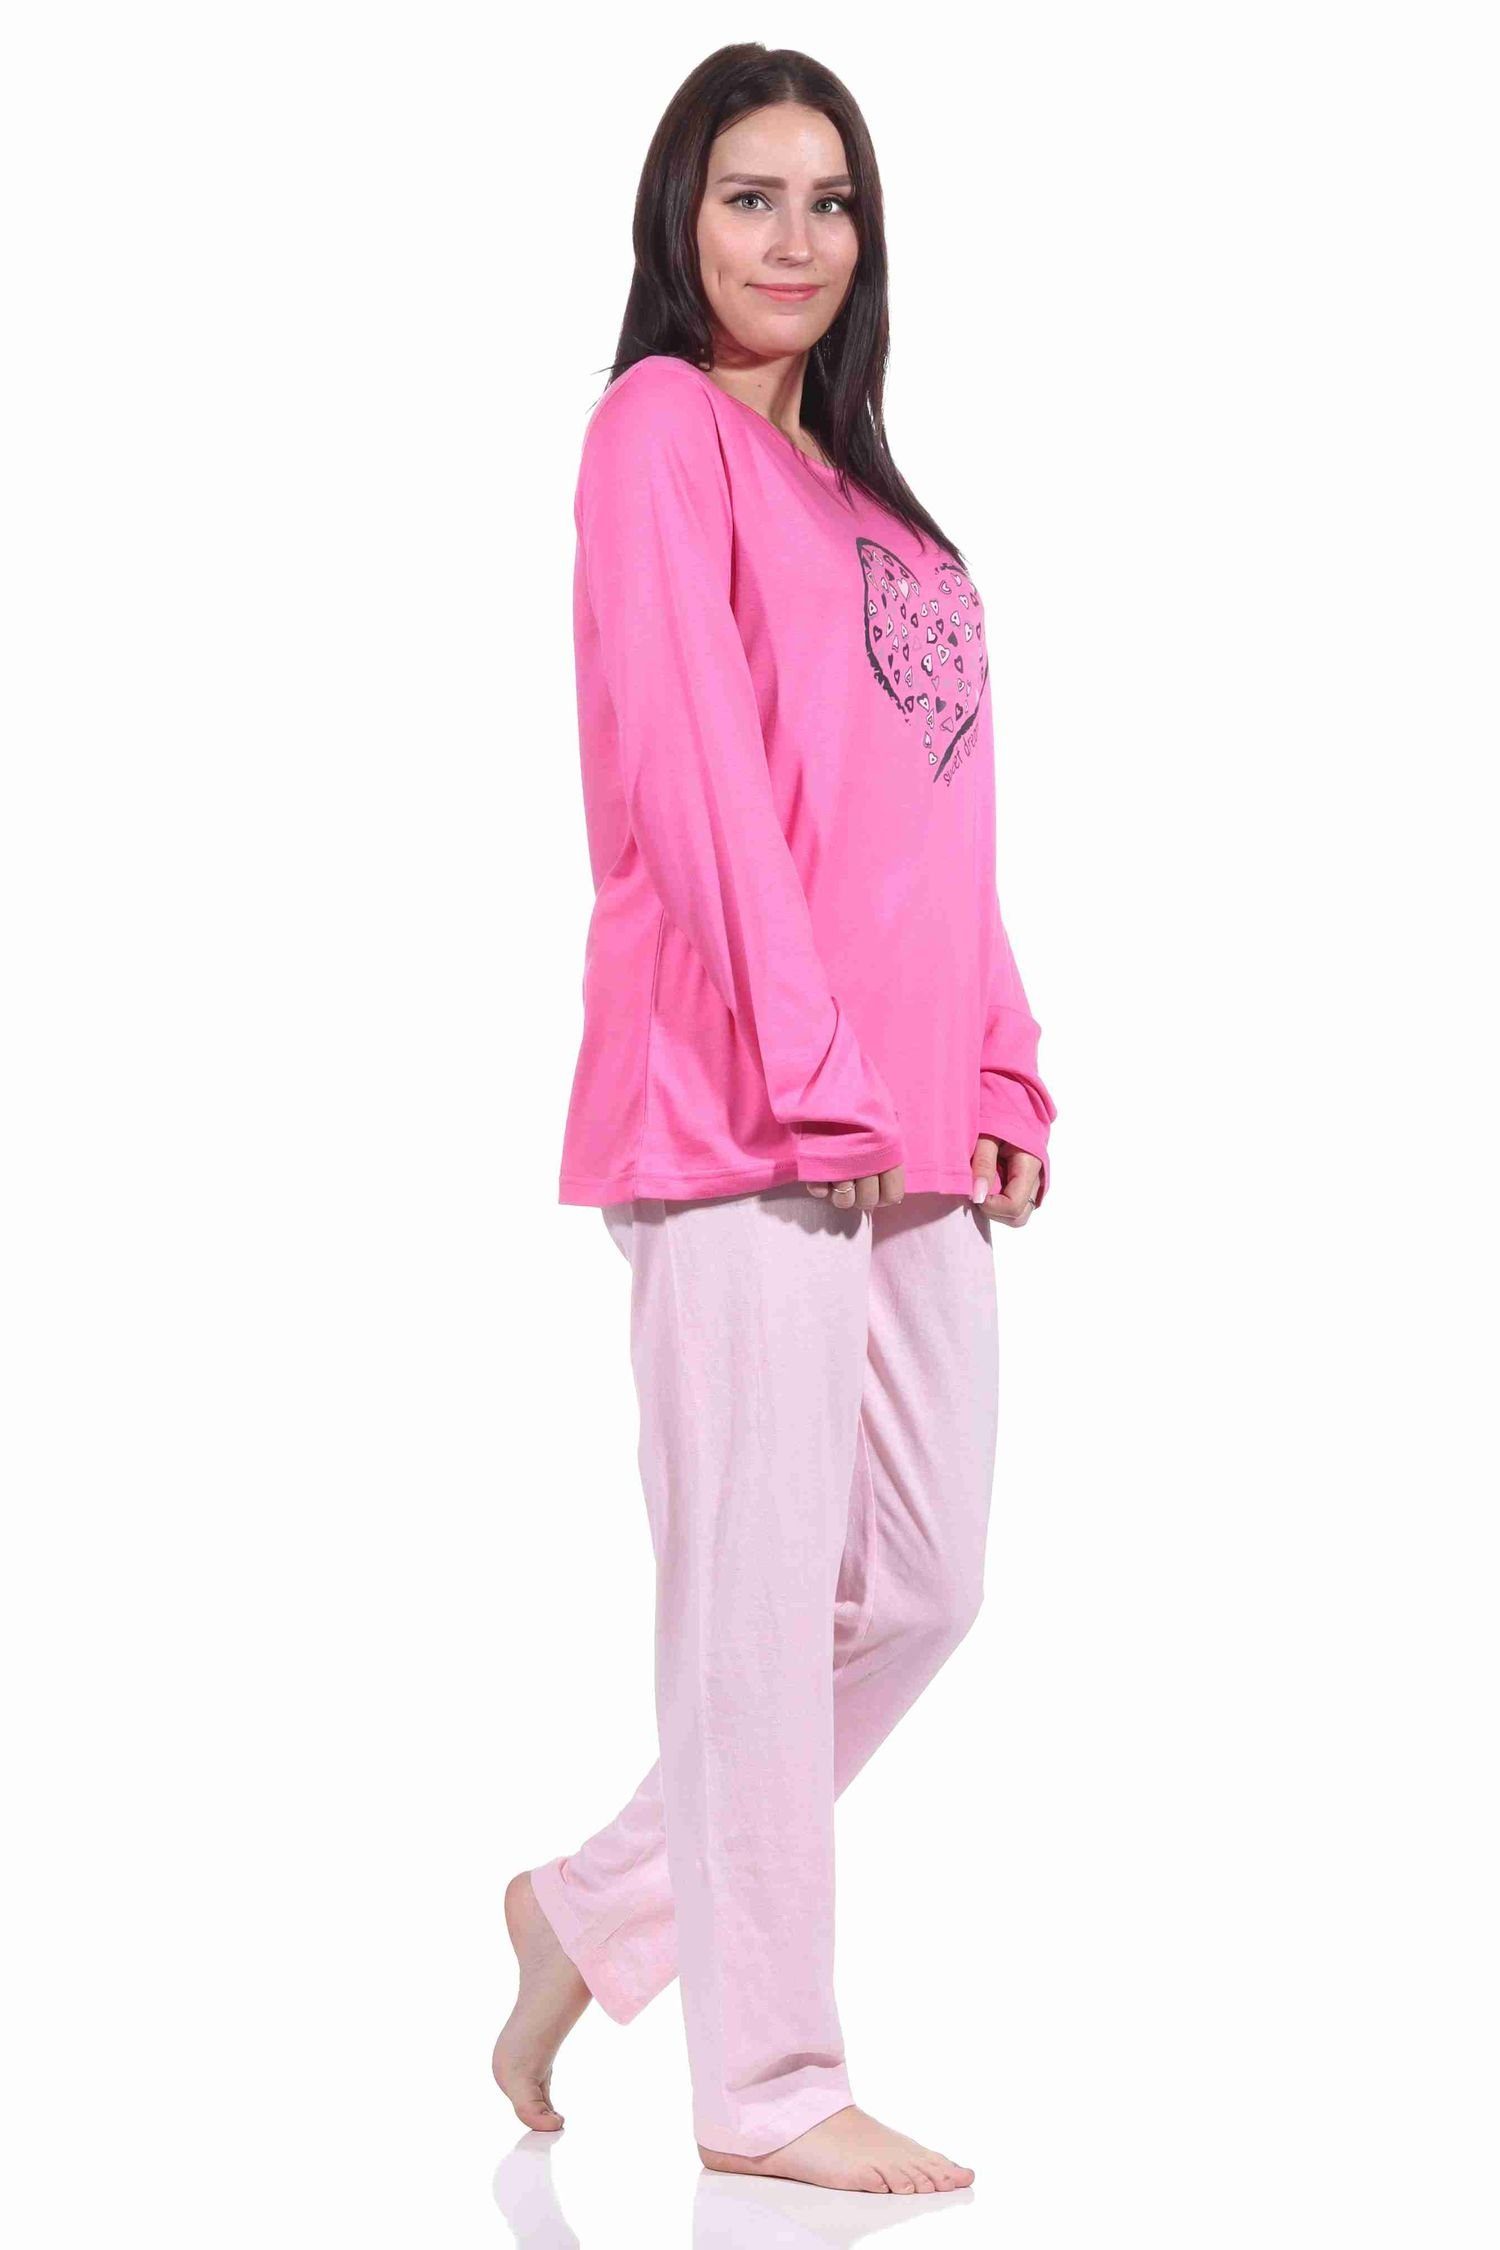 by - 212 Pyjama Normann Herzmotiv 904 10 Pyjama mit langarm Schlafanzug pink RELAX Damen